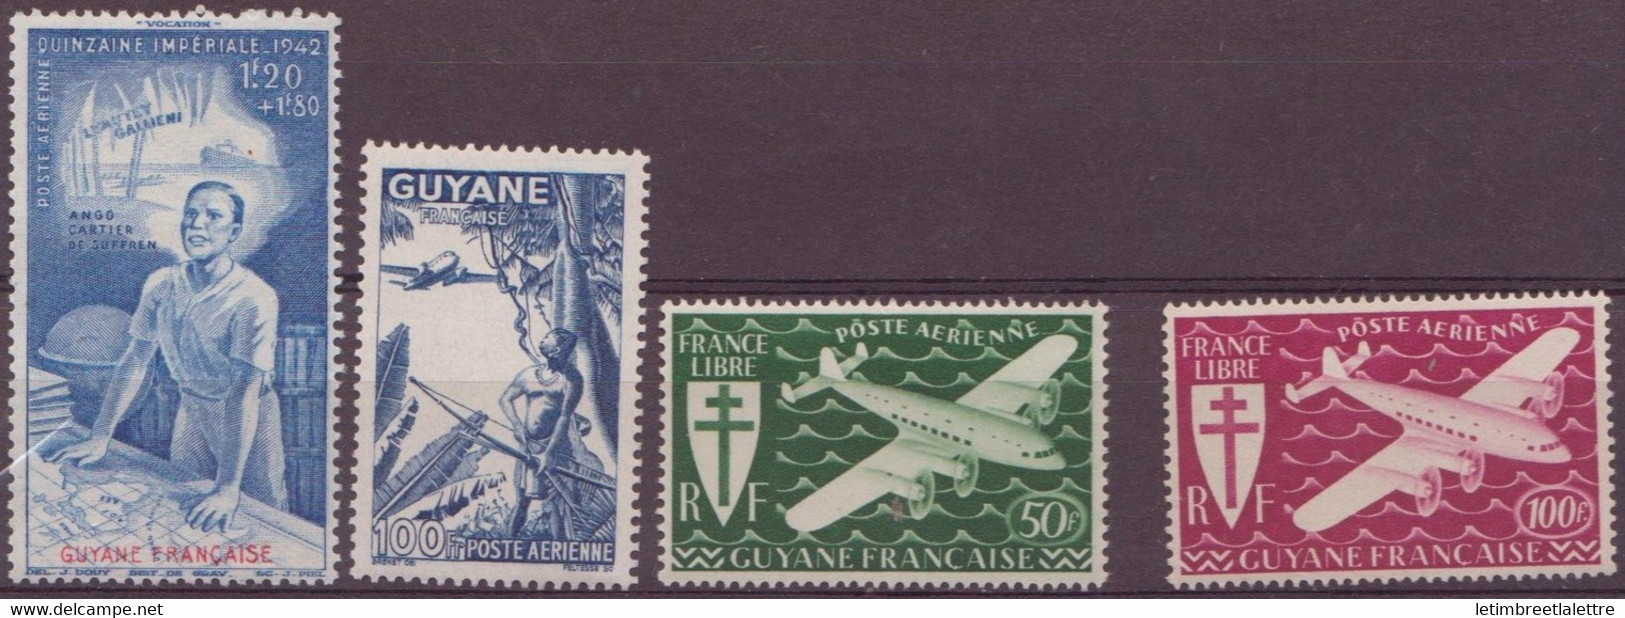 ⭐ Guyane - Poste Aérienne - YT N° 24 à 27 ** - Neuf Sans Charnière - 1944 / 1945 ⭐ - Ongebruikt